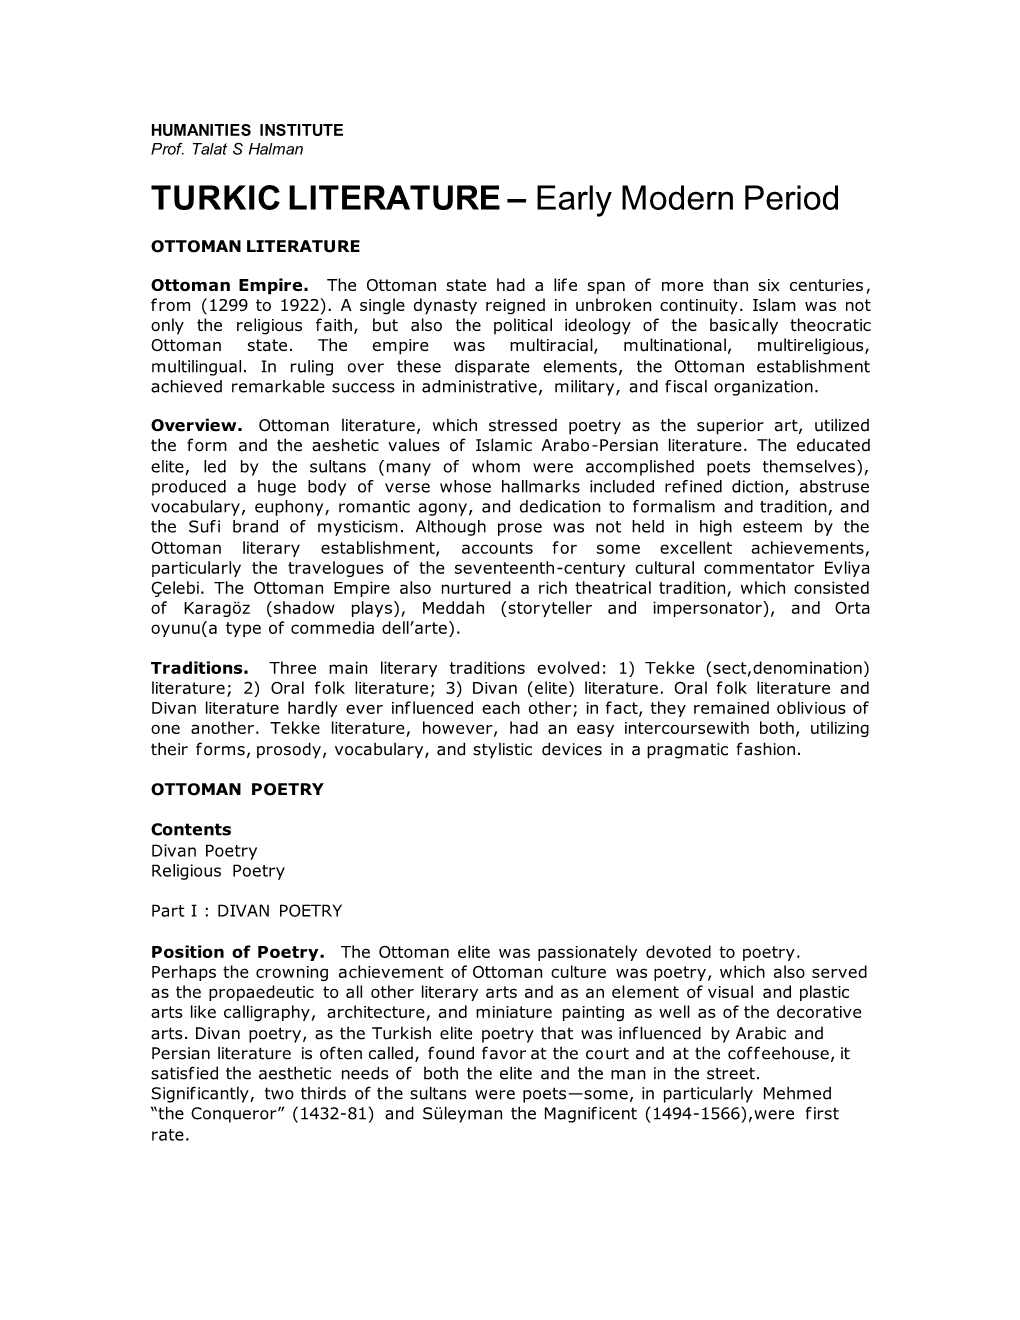 TURKIC LITERATURE – Early Modern Period